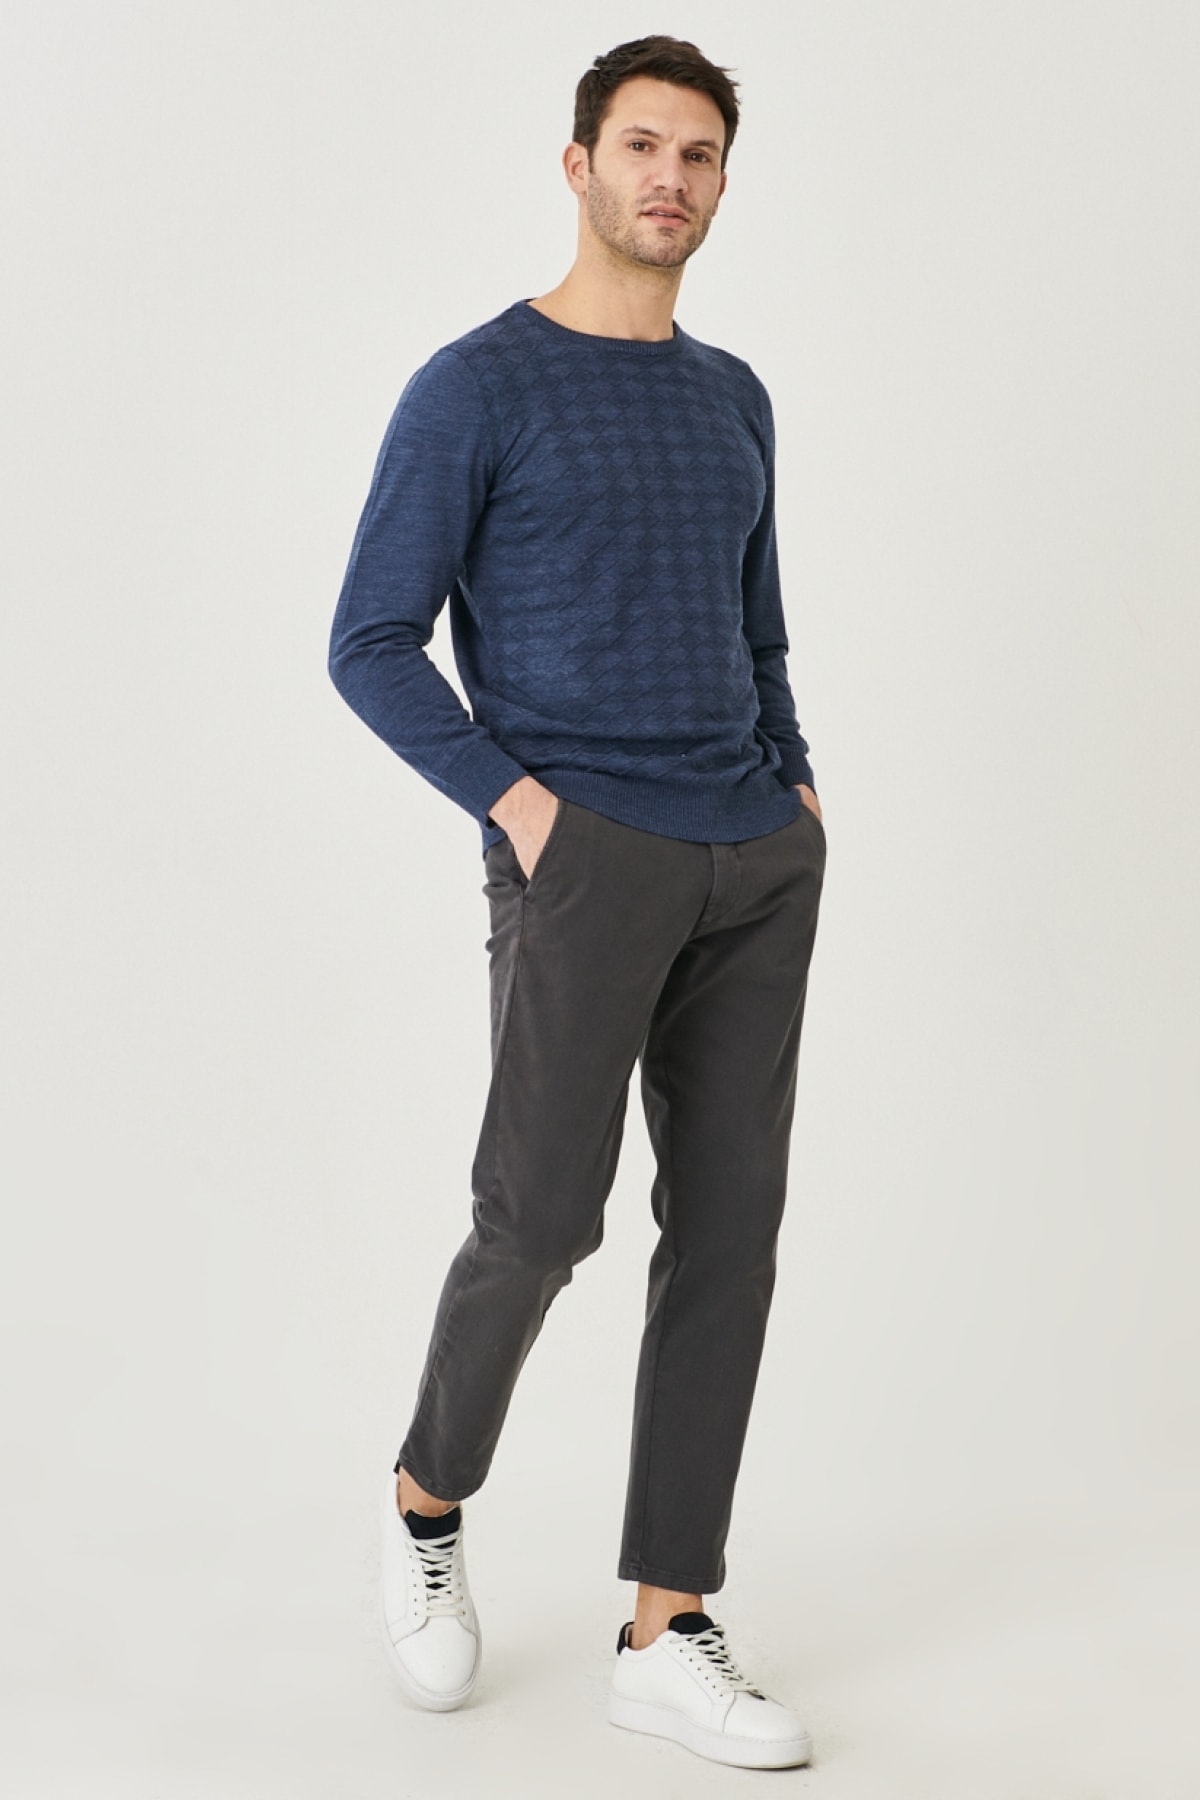 ALTINYILDIZ CLASSICS Men's Dark Gray Comfort Fit 360 Degree Flexibility in All Directions Side Pocket Trousers.